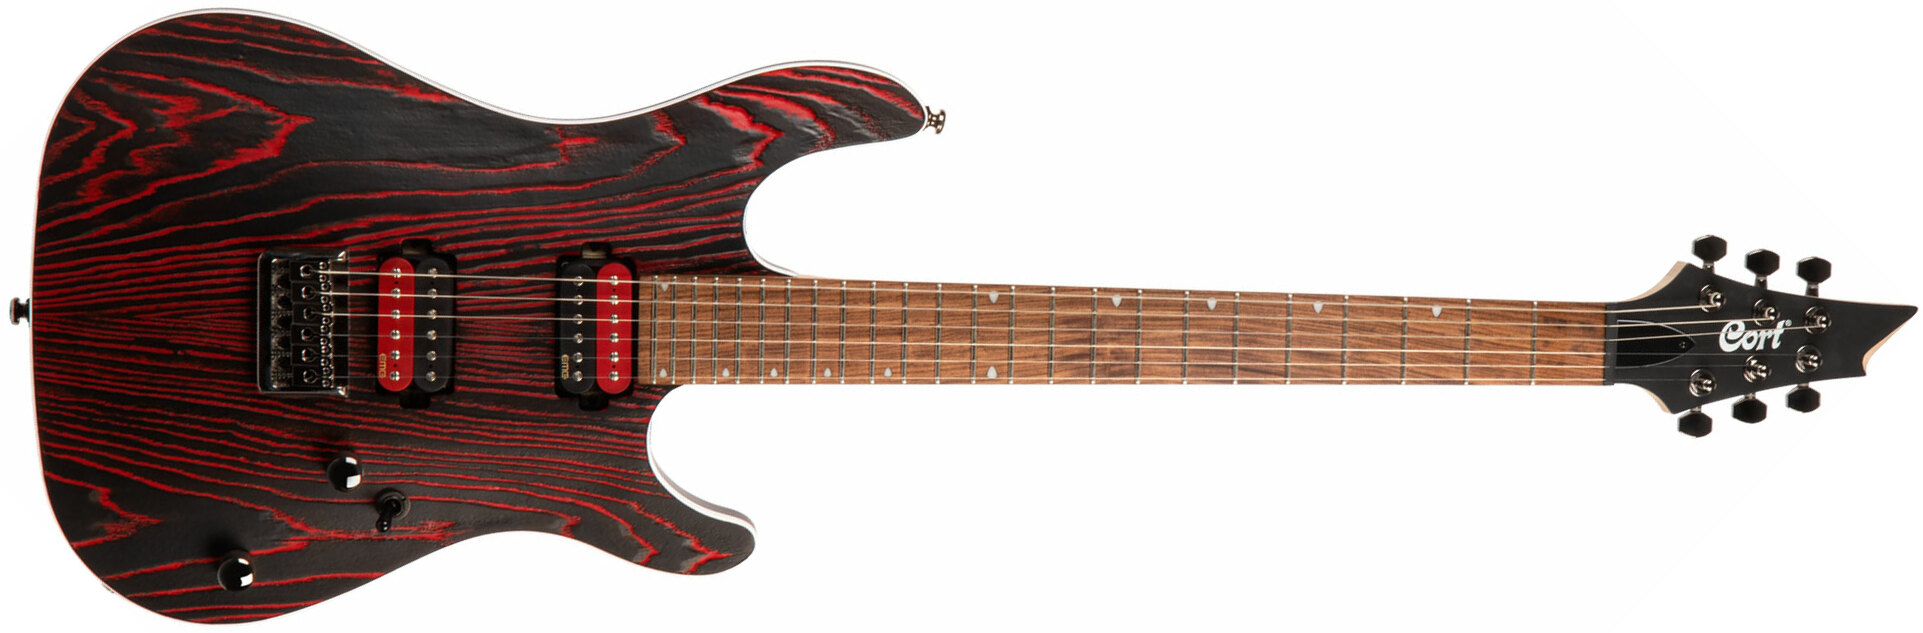 Cort Kx300 Ebr Hh Emg Ht Jat - Etched Black Red - Str shape electric guitar - Main picture